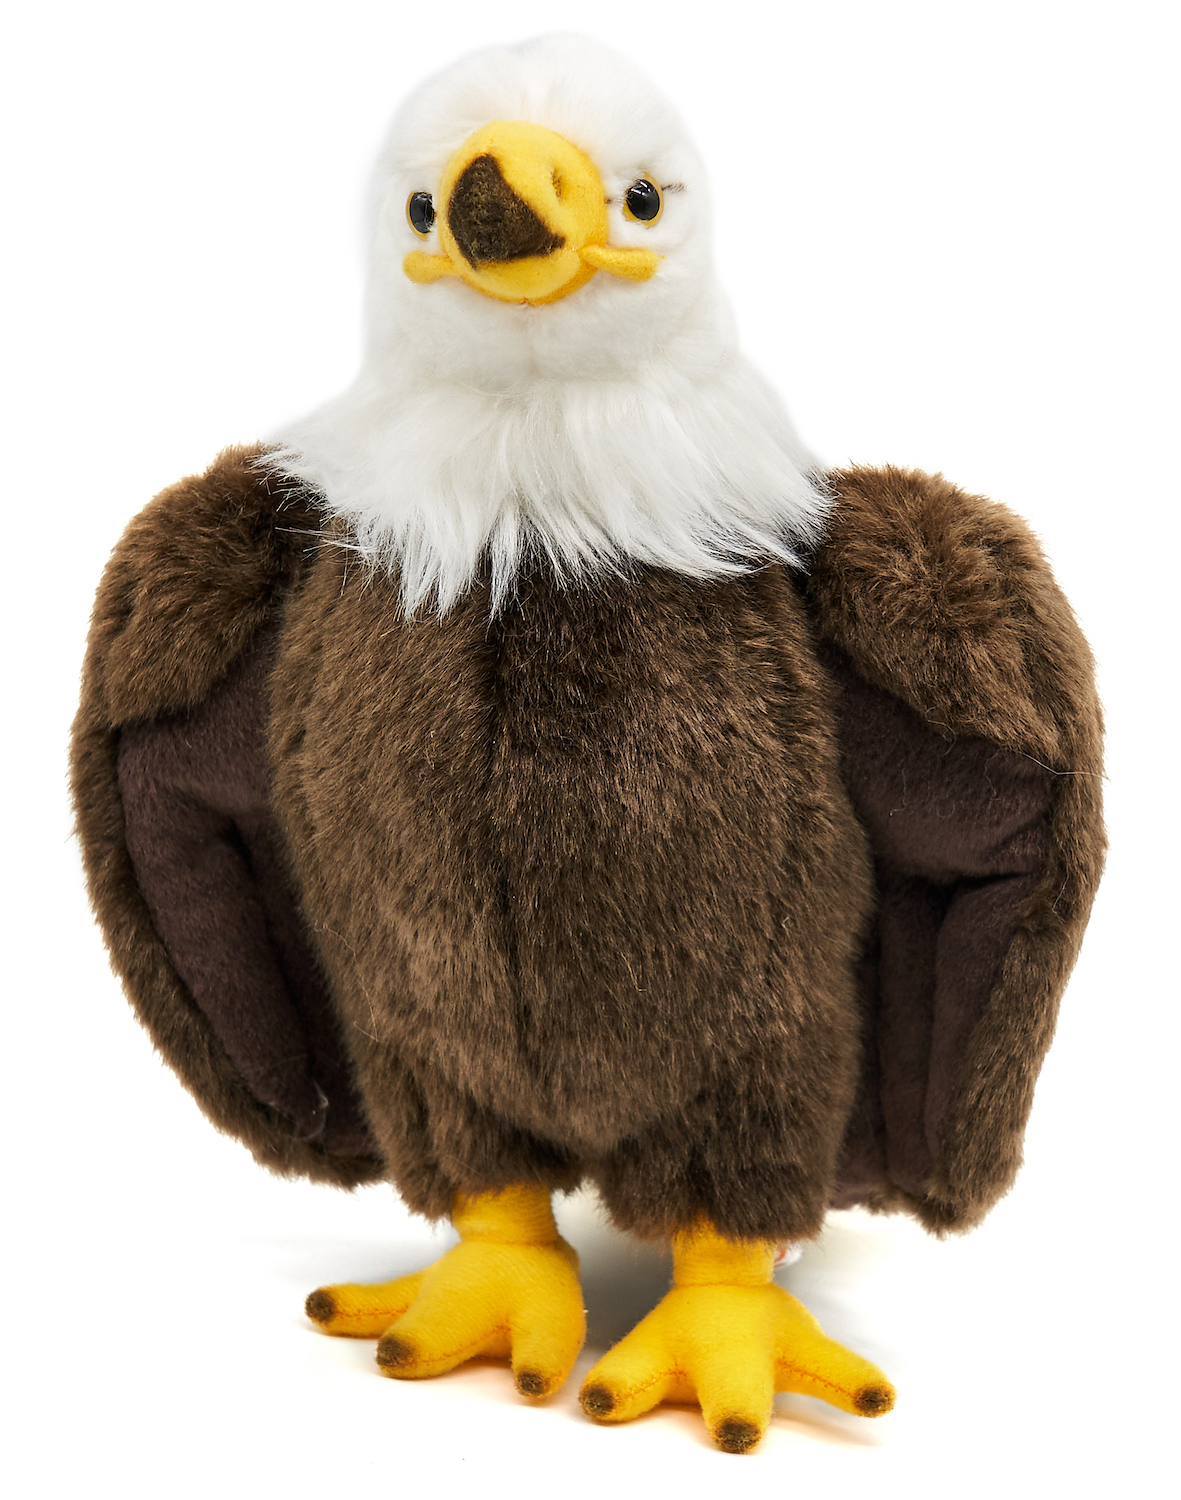  Bald Eagle - 24 cm (height) 